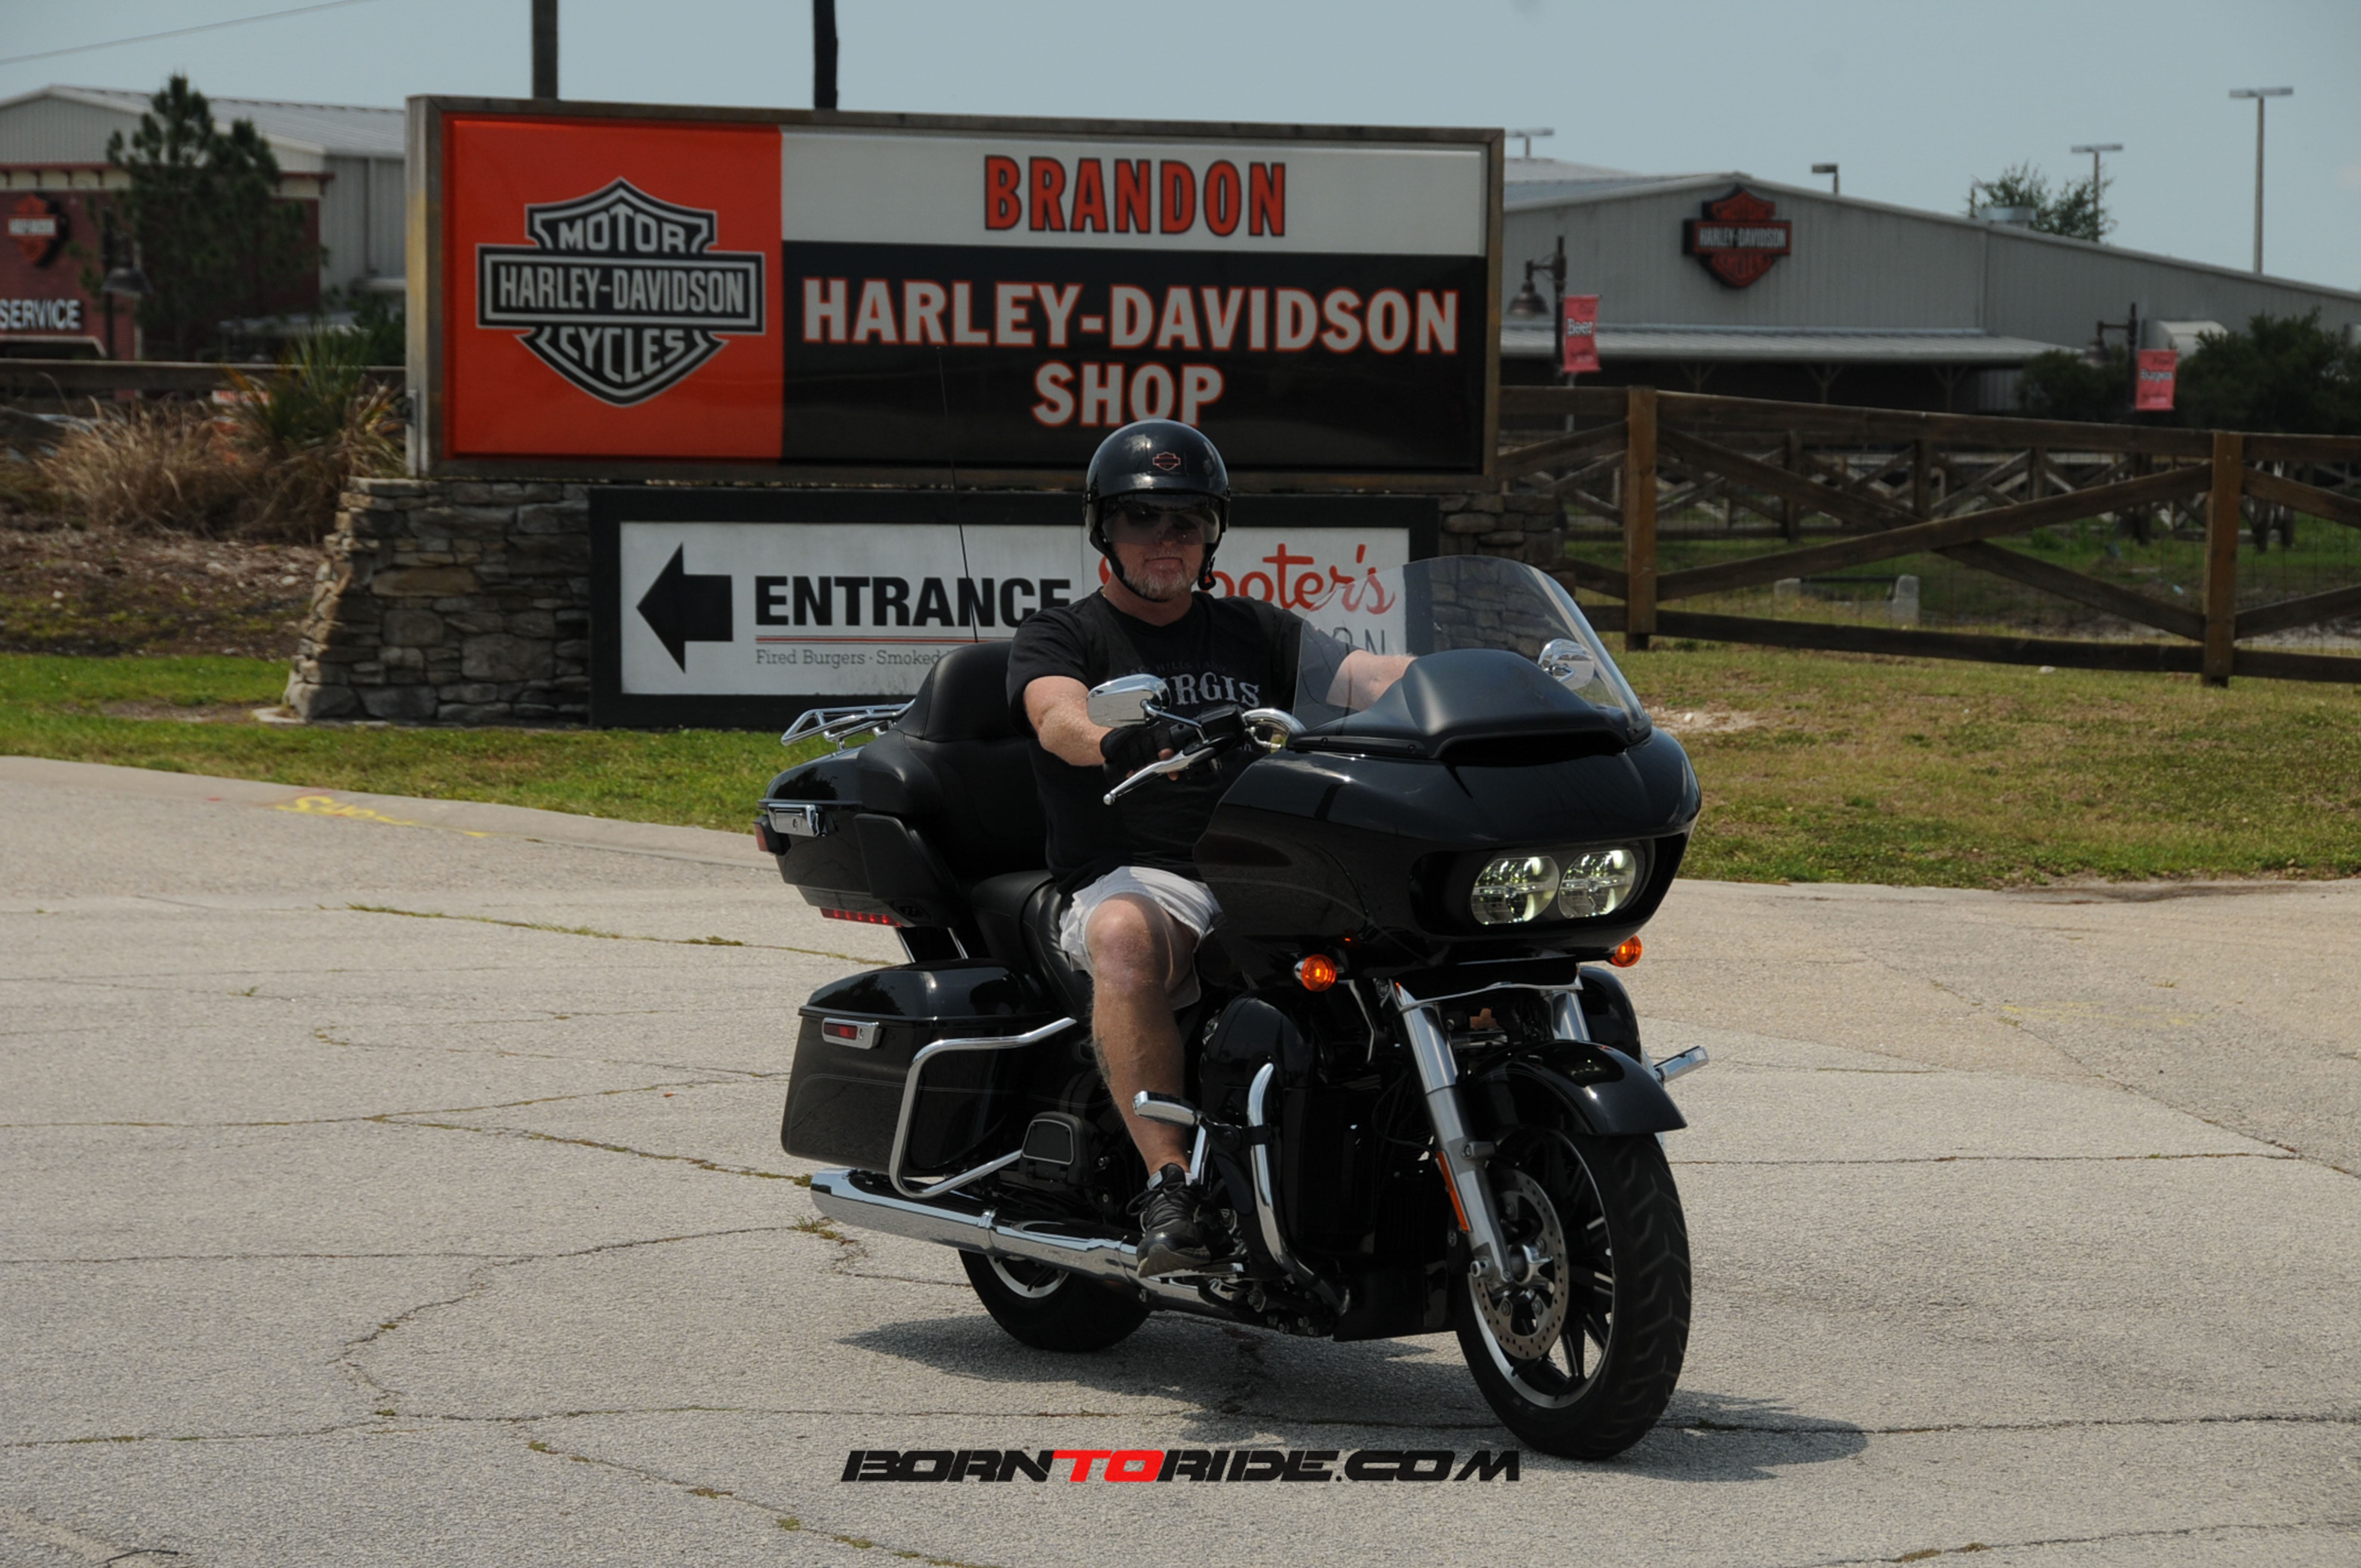 Brandon Harley Davidson 2017 0140 | Born To Ride Motorcycle Magazine ...